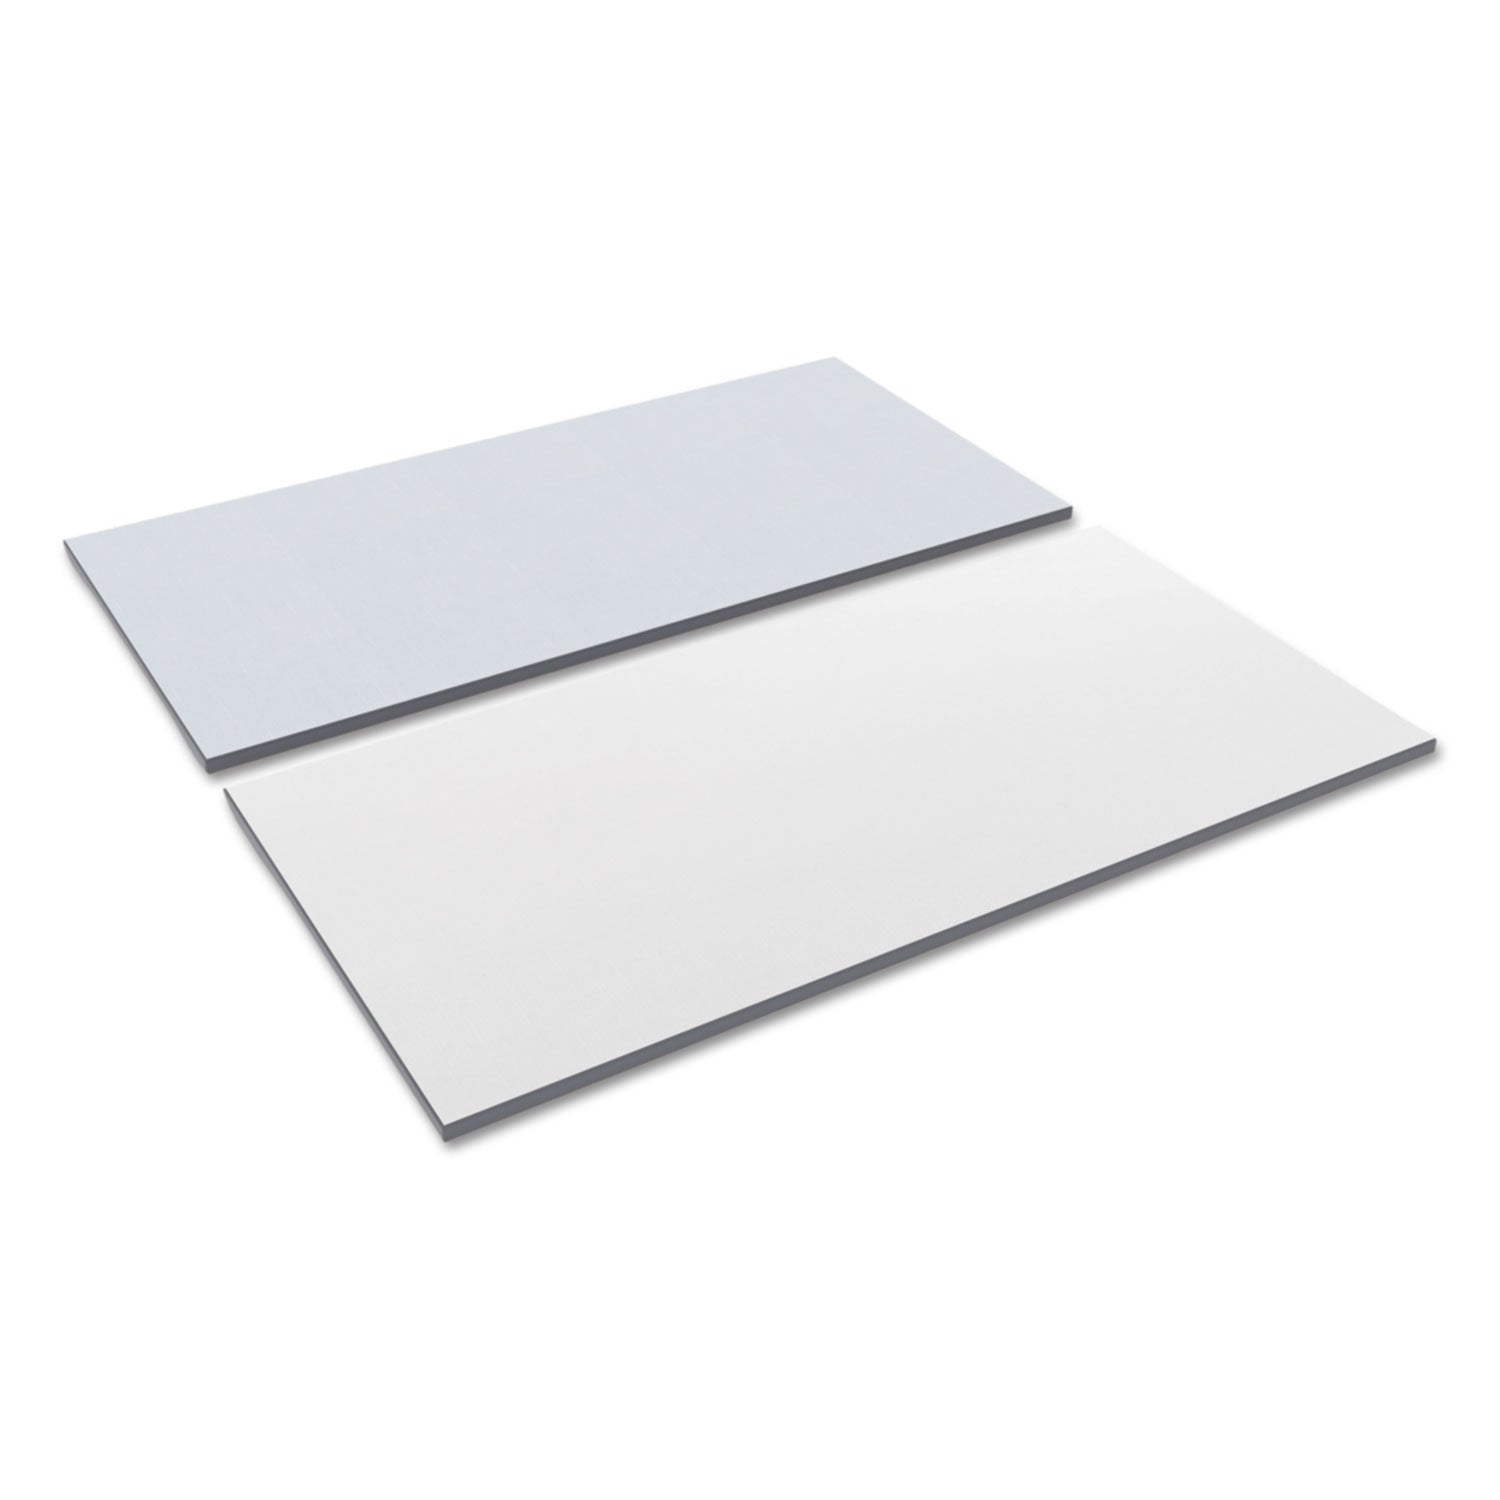 reversible-laminate-table-top-rectangular-5938w-x-295d-white-gray_alett6030wg - 1